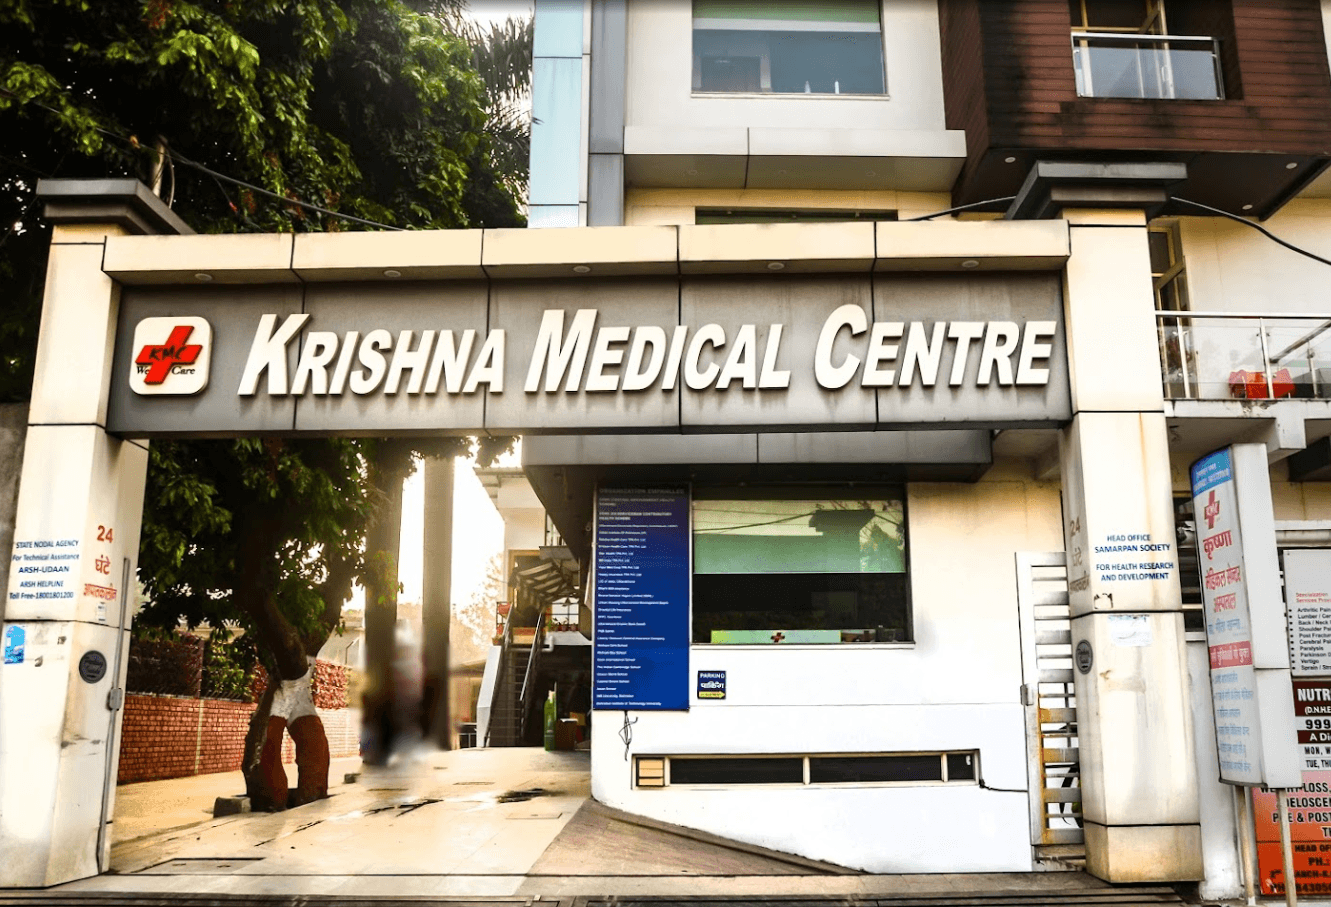 Krishna Medical Centre